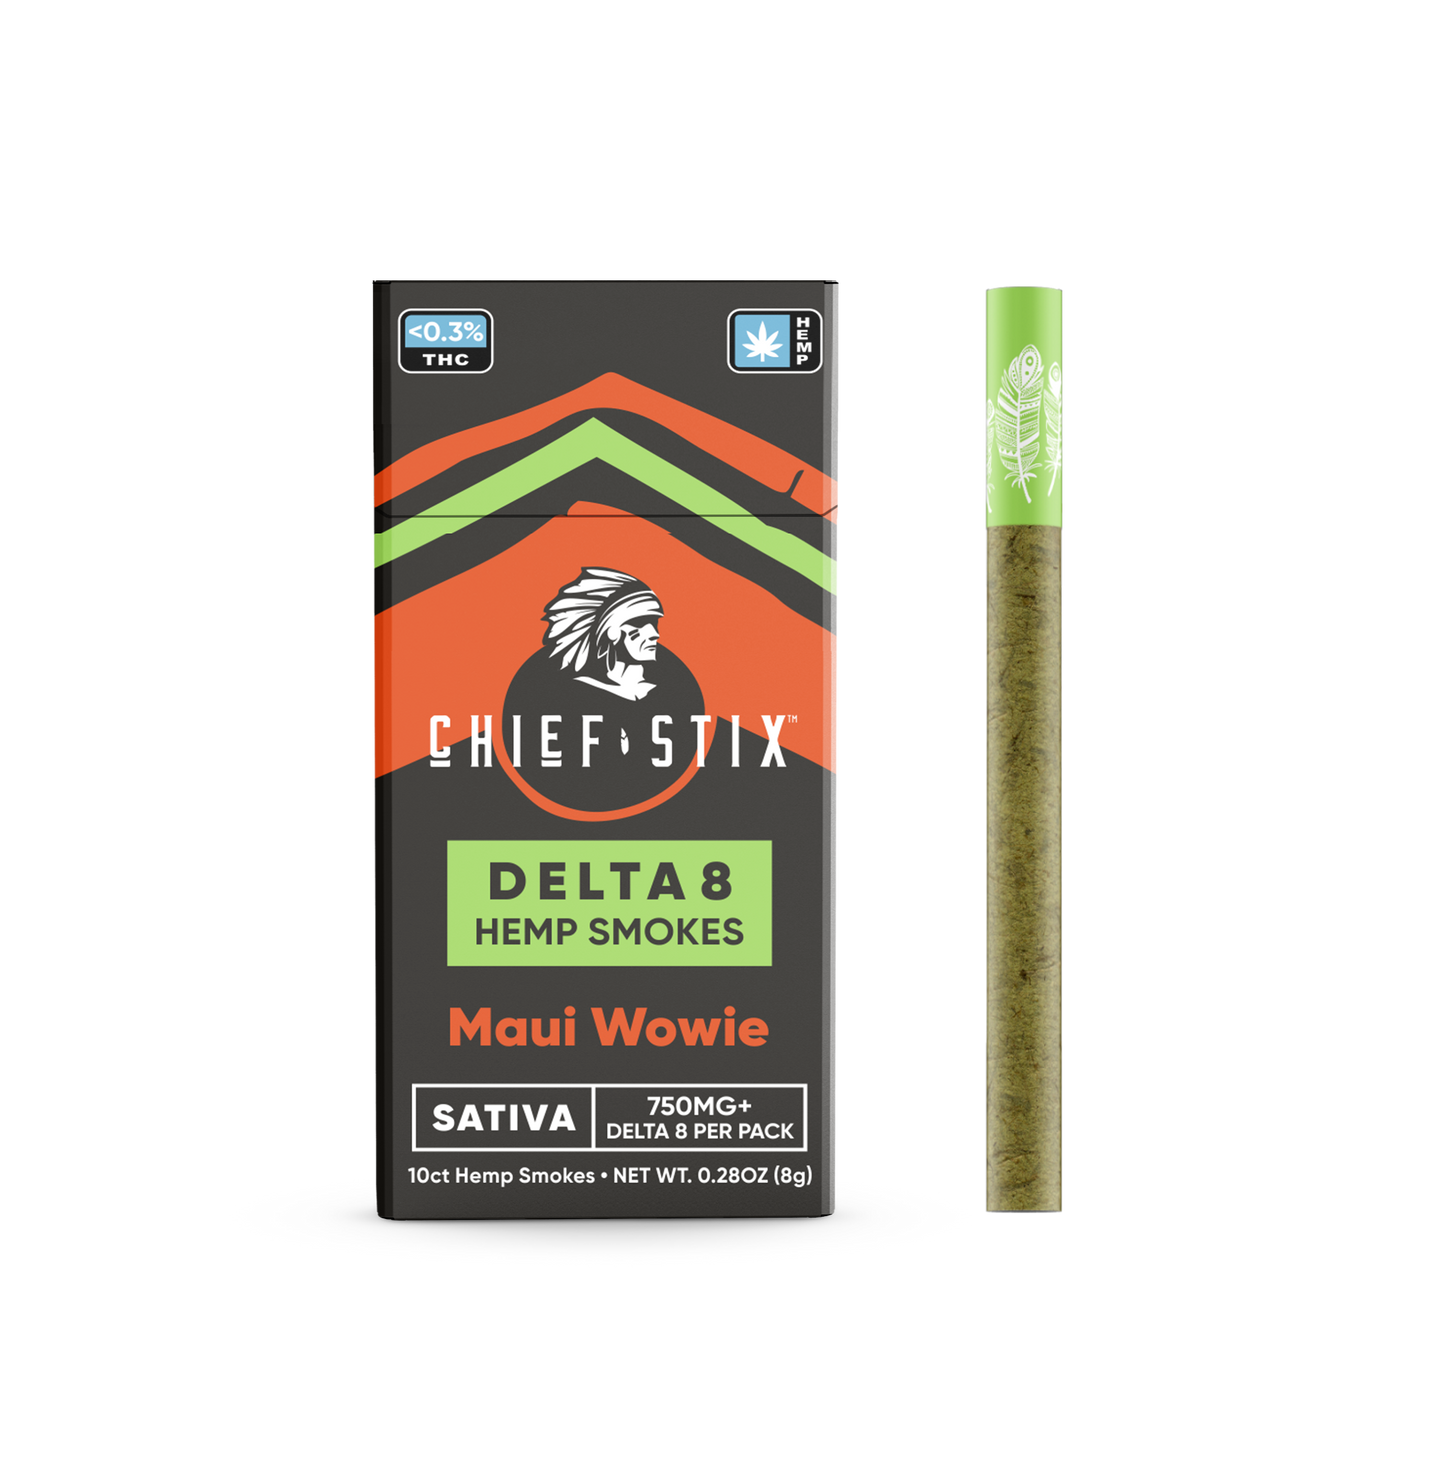 Chief Stix Delta 8 Hemp Smokes 10ct 750mg Maui Wowie - (10pk Carton) - hhemp.co Wholesale 